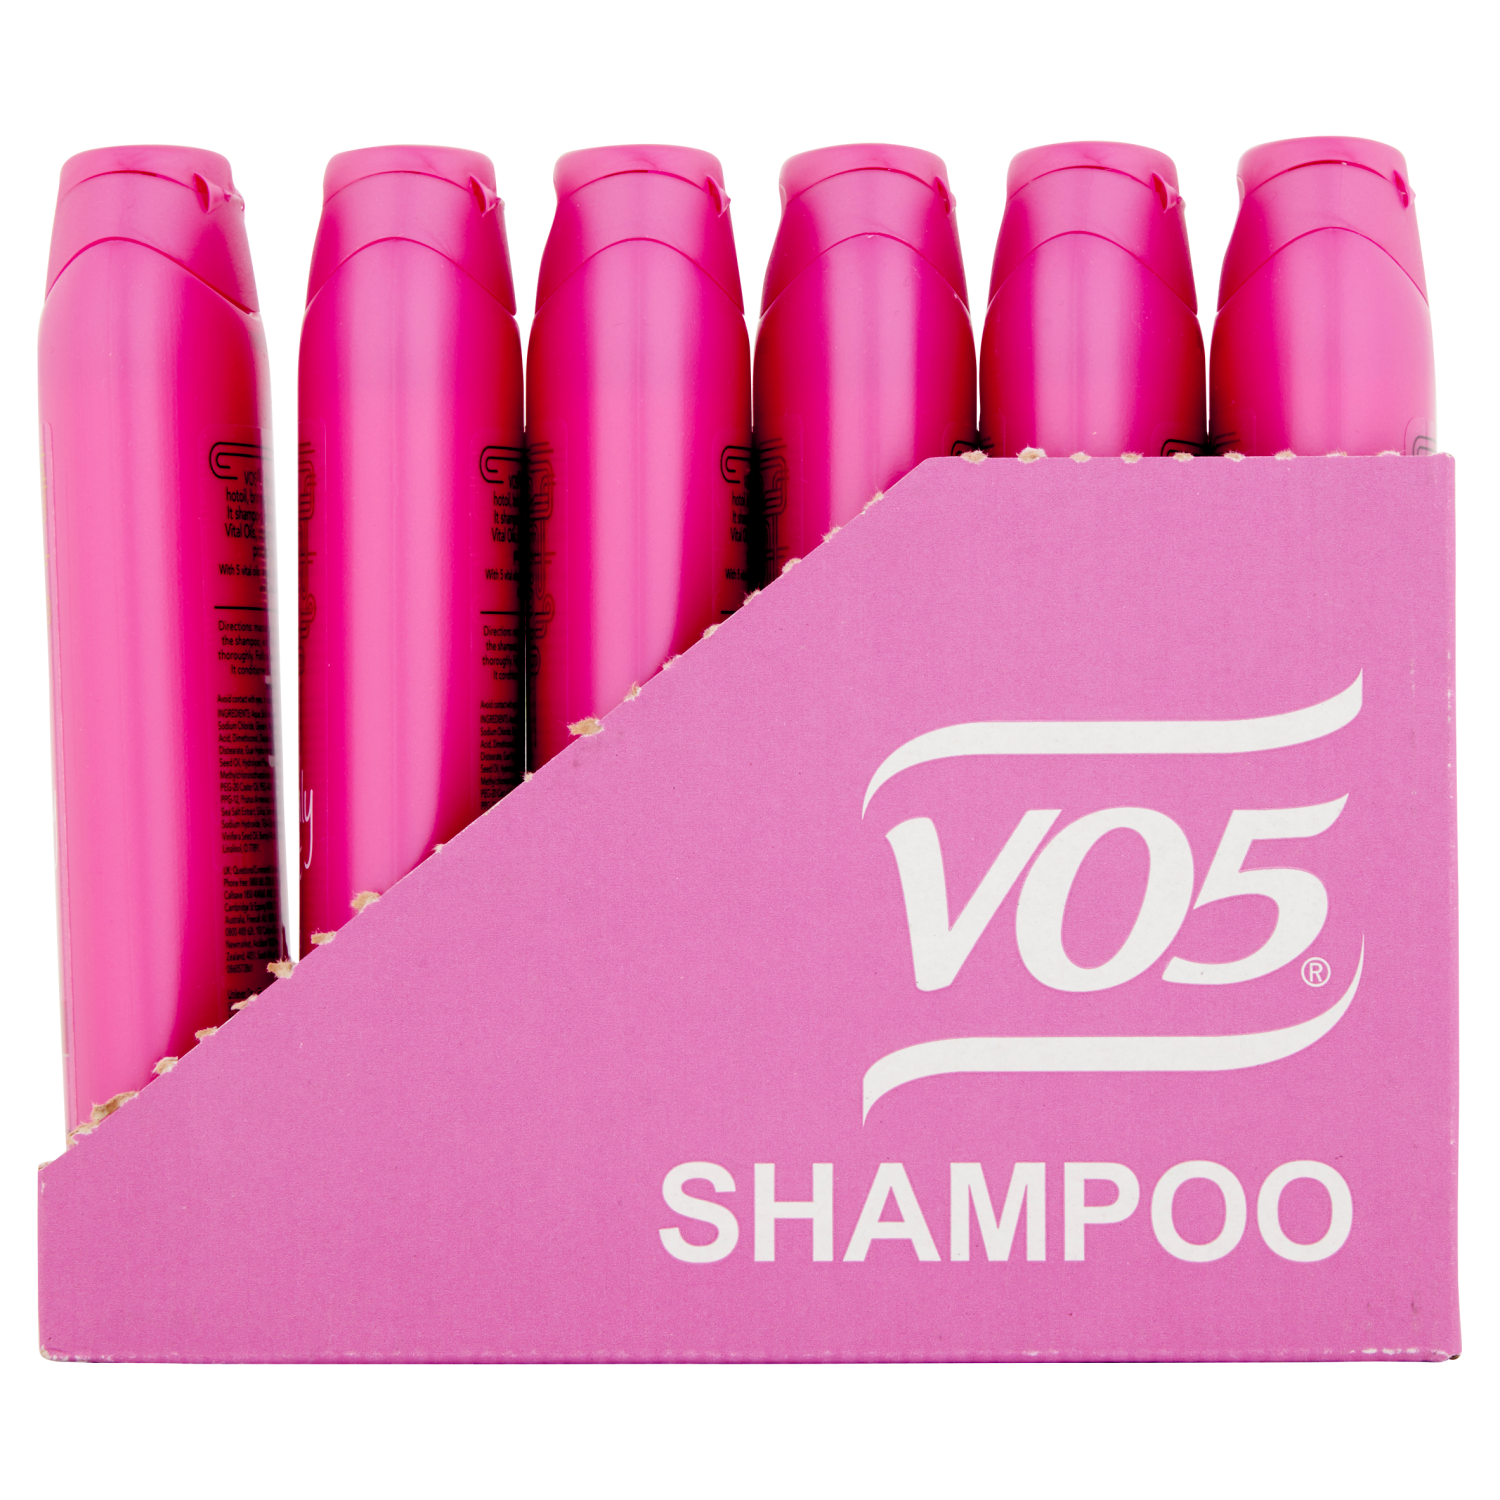 VO5 Shampoo 250ml Smoothly Does It